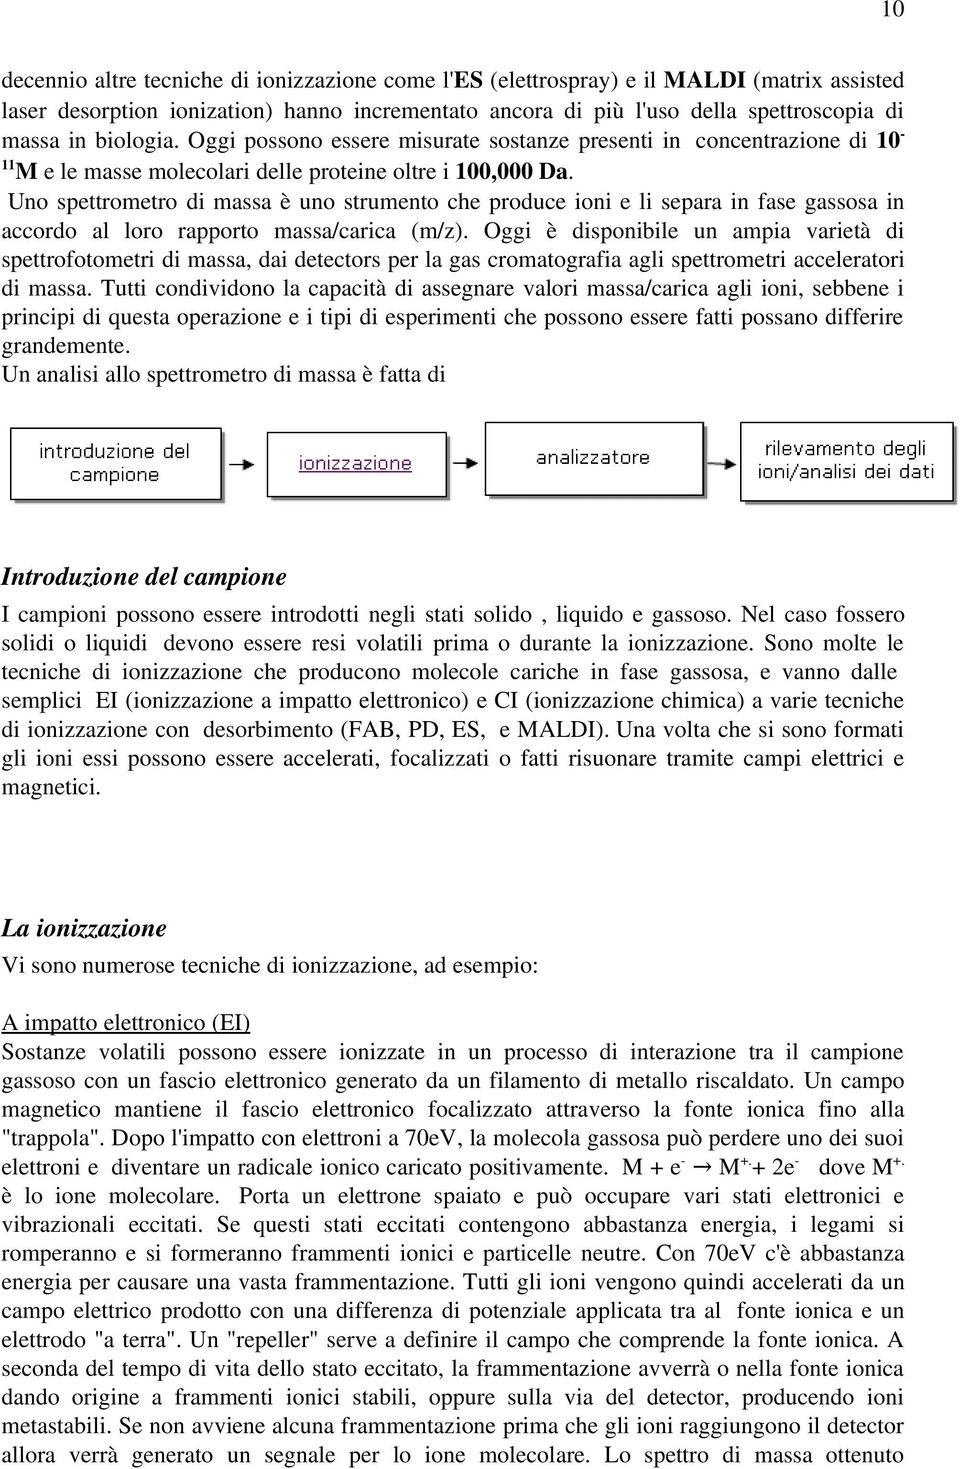 Unospettrometrodimassaèunostrumentocheproduceionieliseparainfasegassosain accordo al loro rapporto massa/carica (m/z).